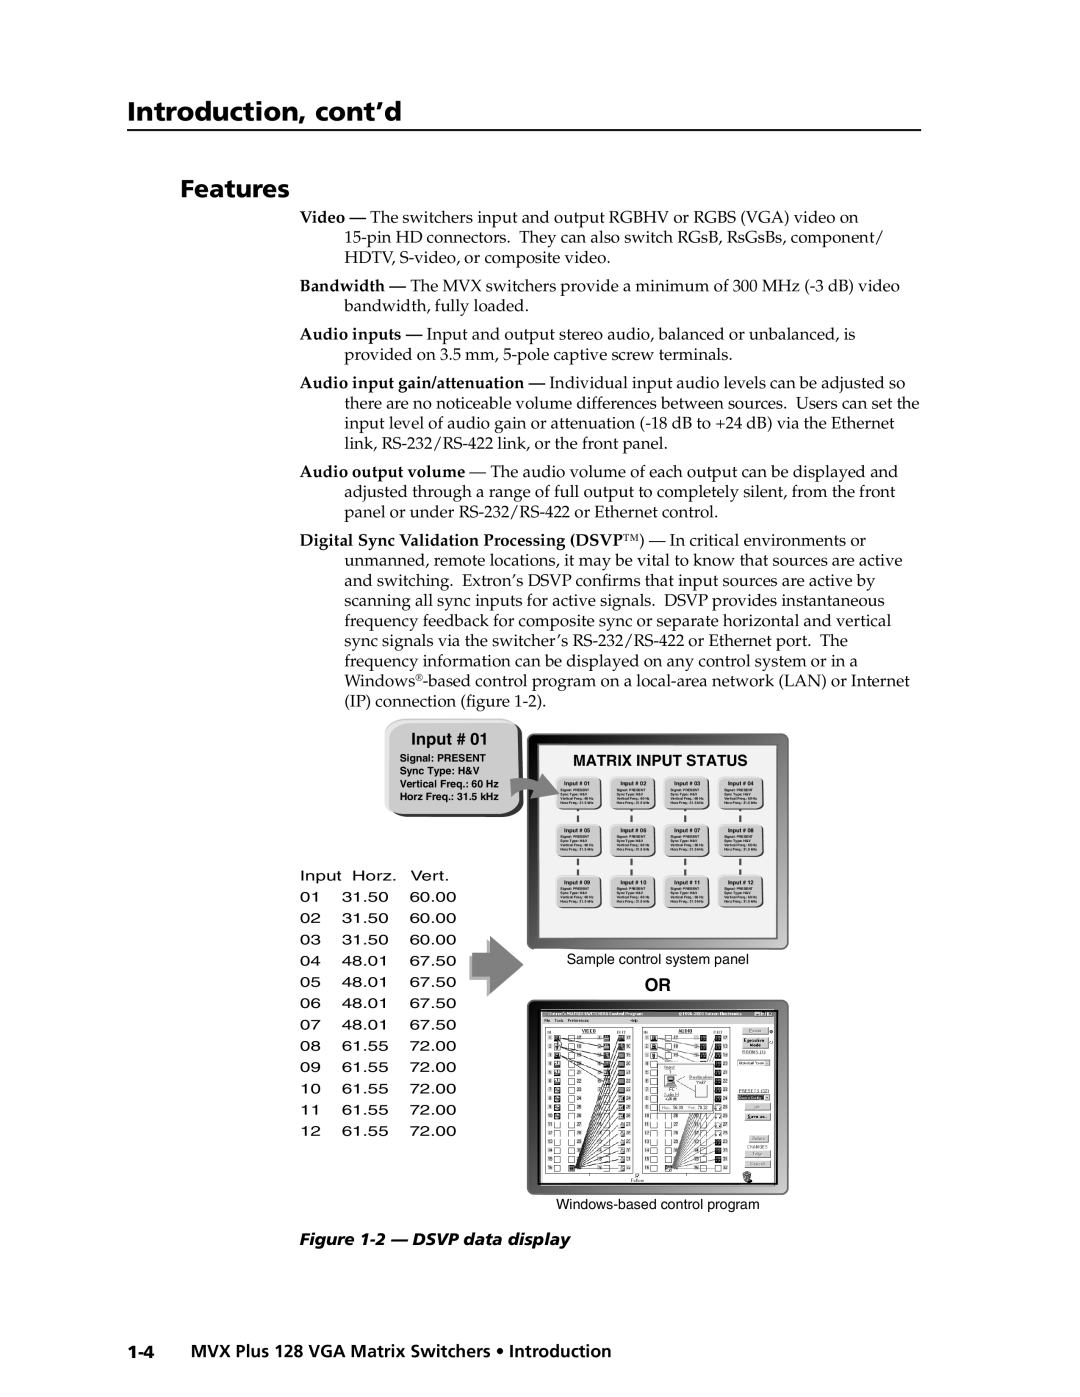 Extron electronic MVX PLUS 128 manual Introduction, cont’d, Features, Input #, 2 - DSVP data display 